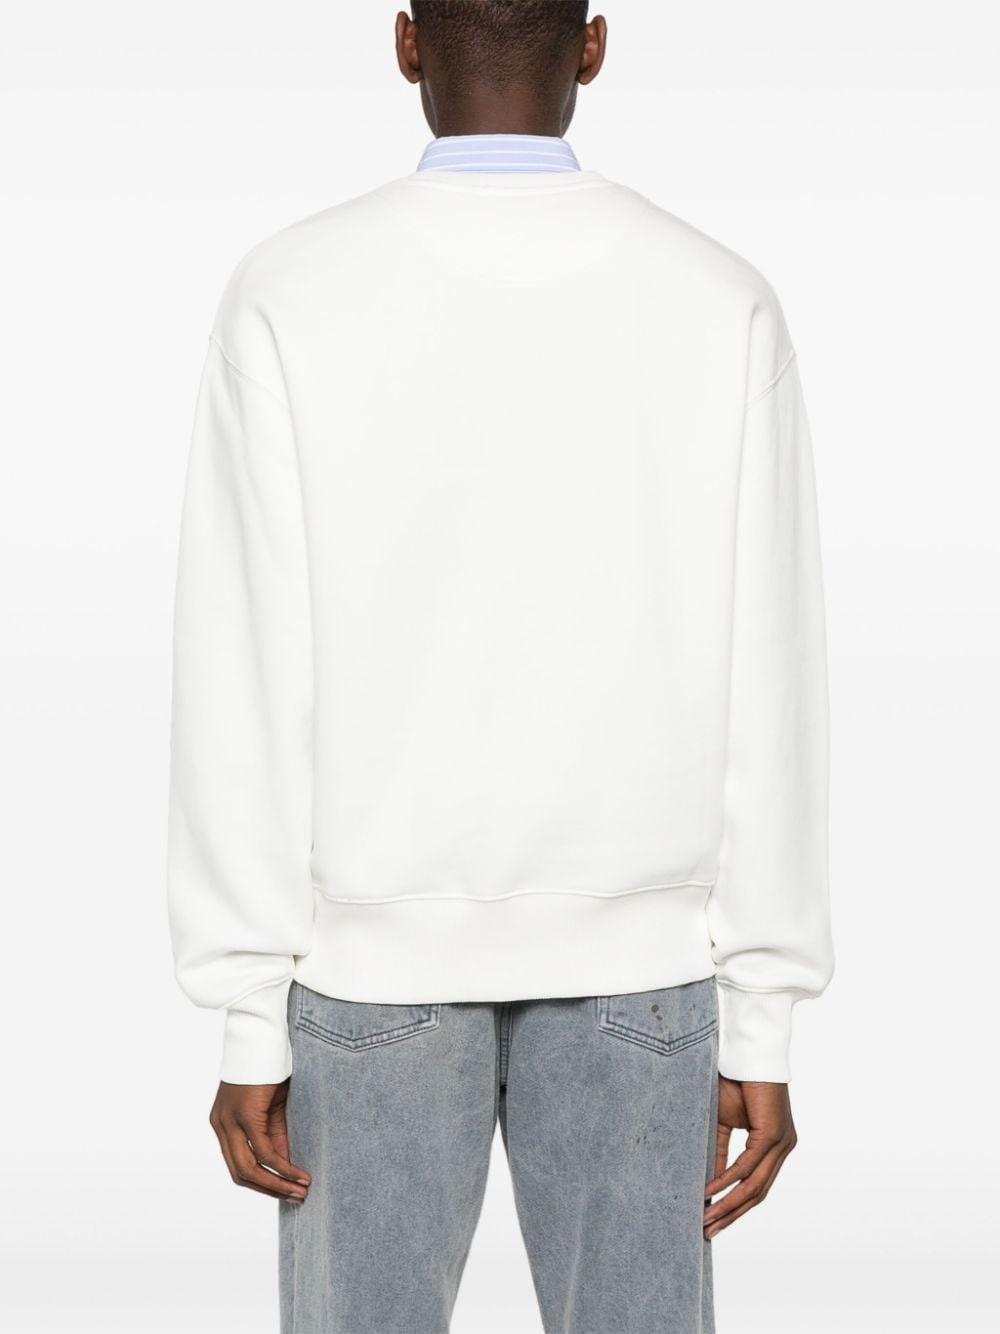 Shop Egonlab Logo-print Cotton Sweatshirt In White